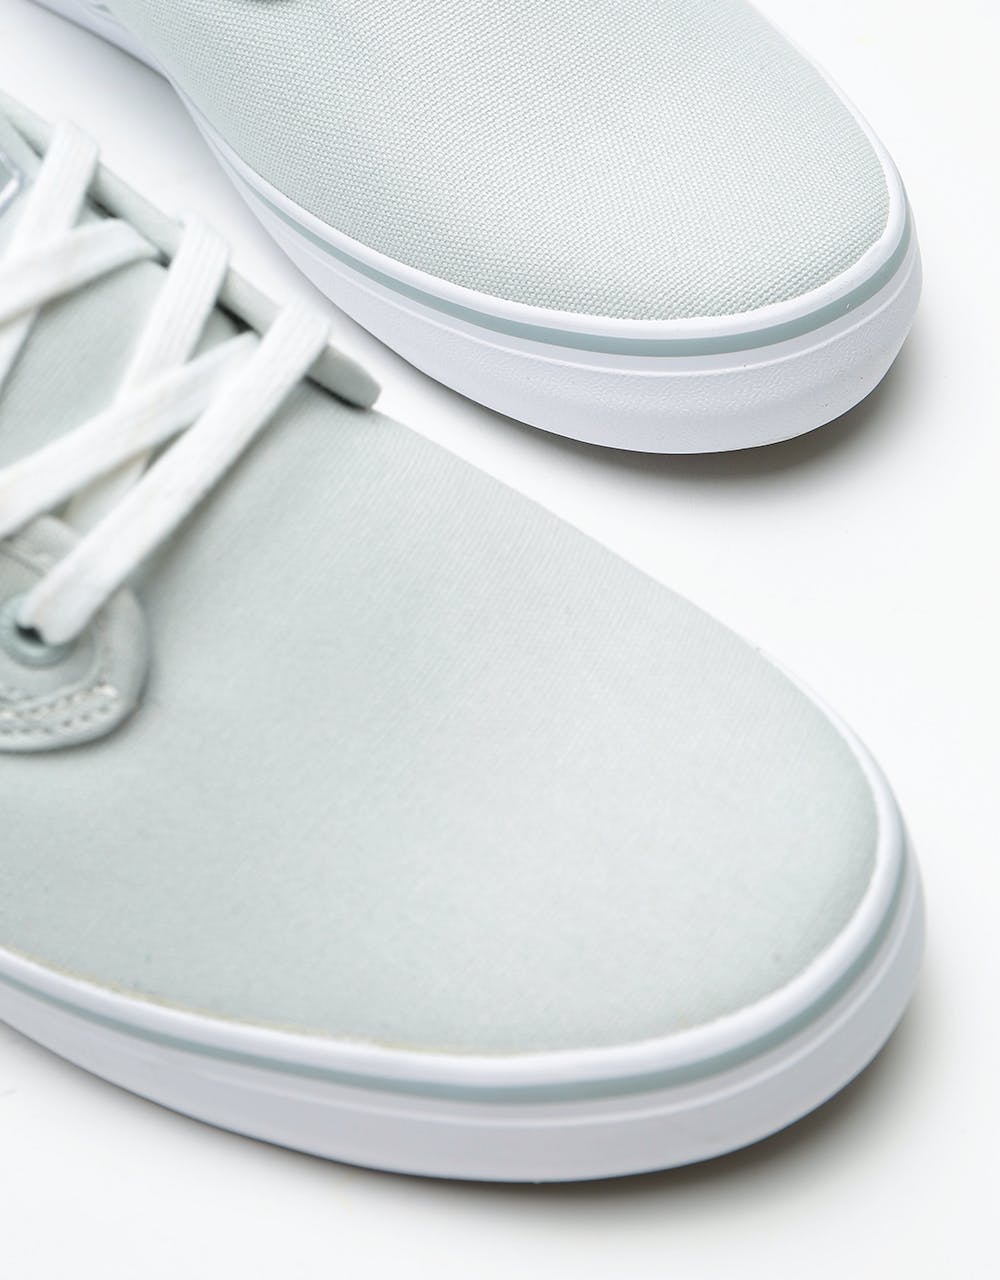 Globe Motley Skate Shoes - Grey Canvas/White